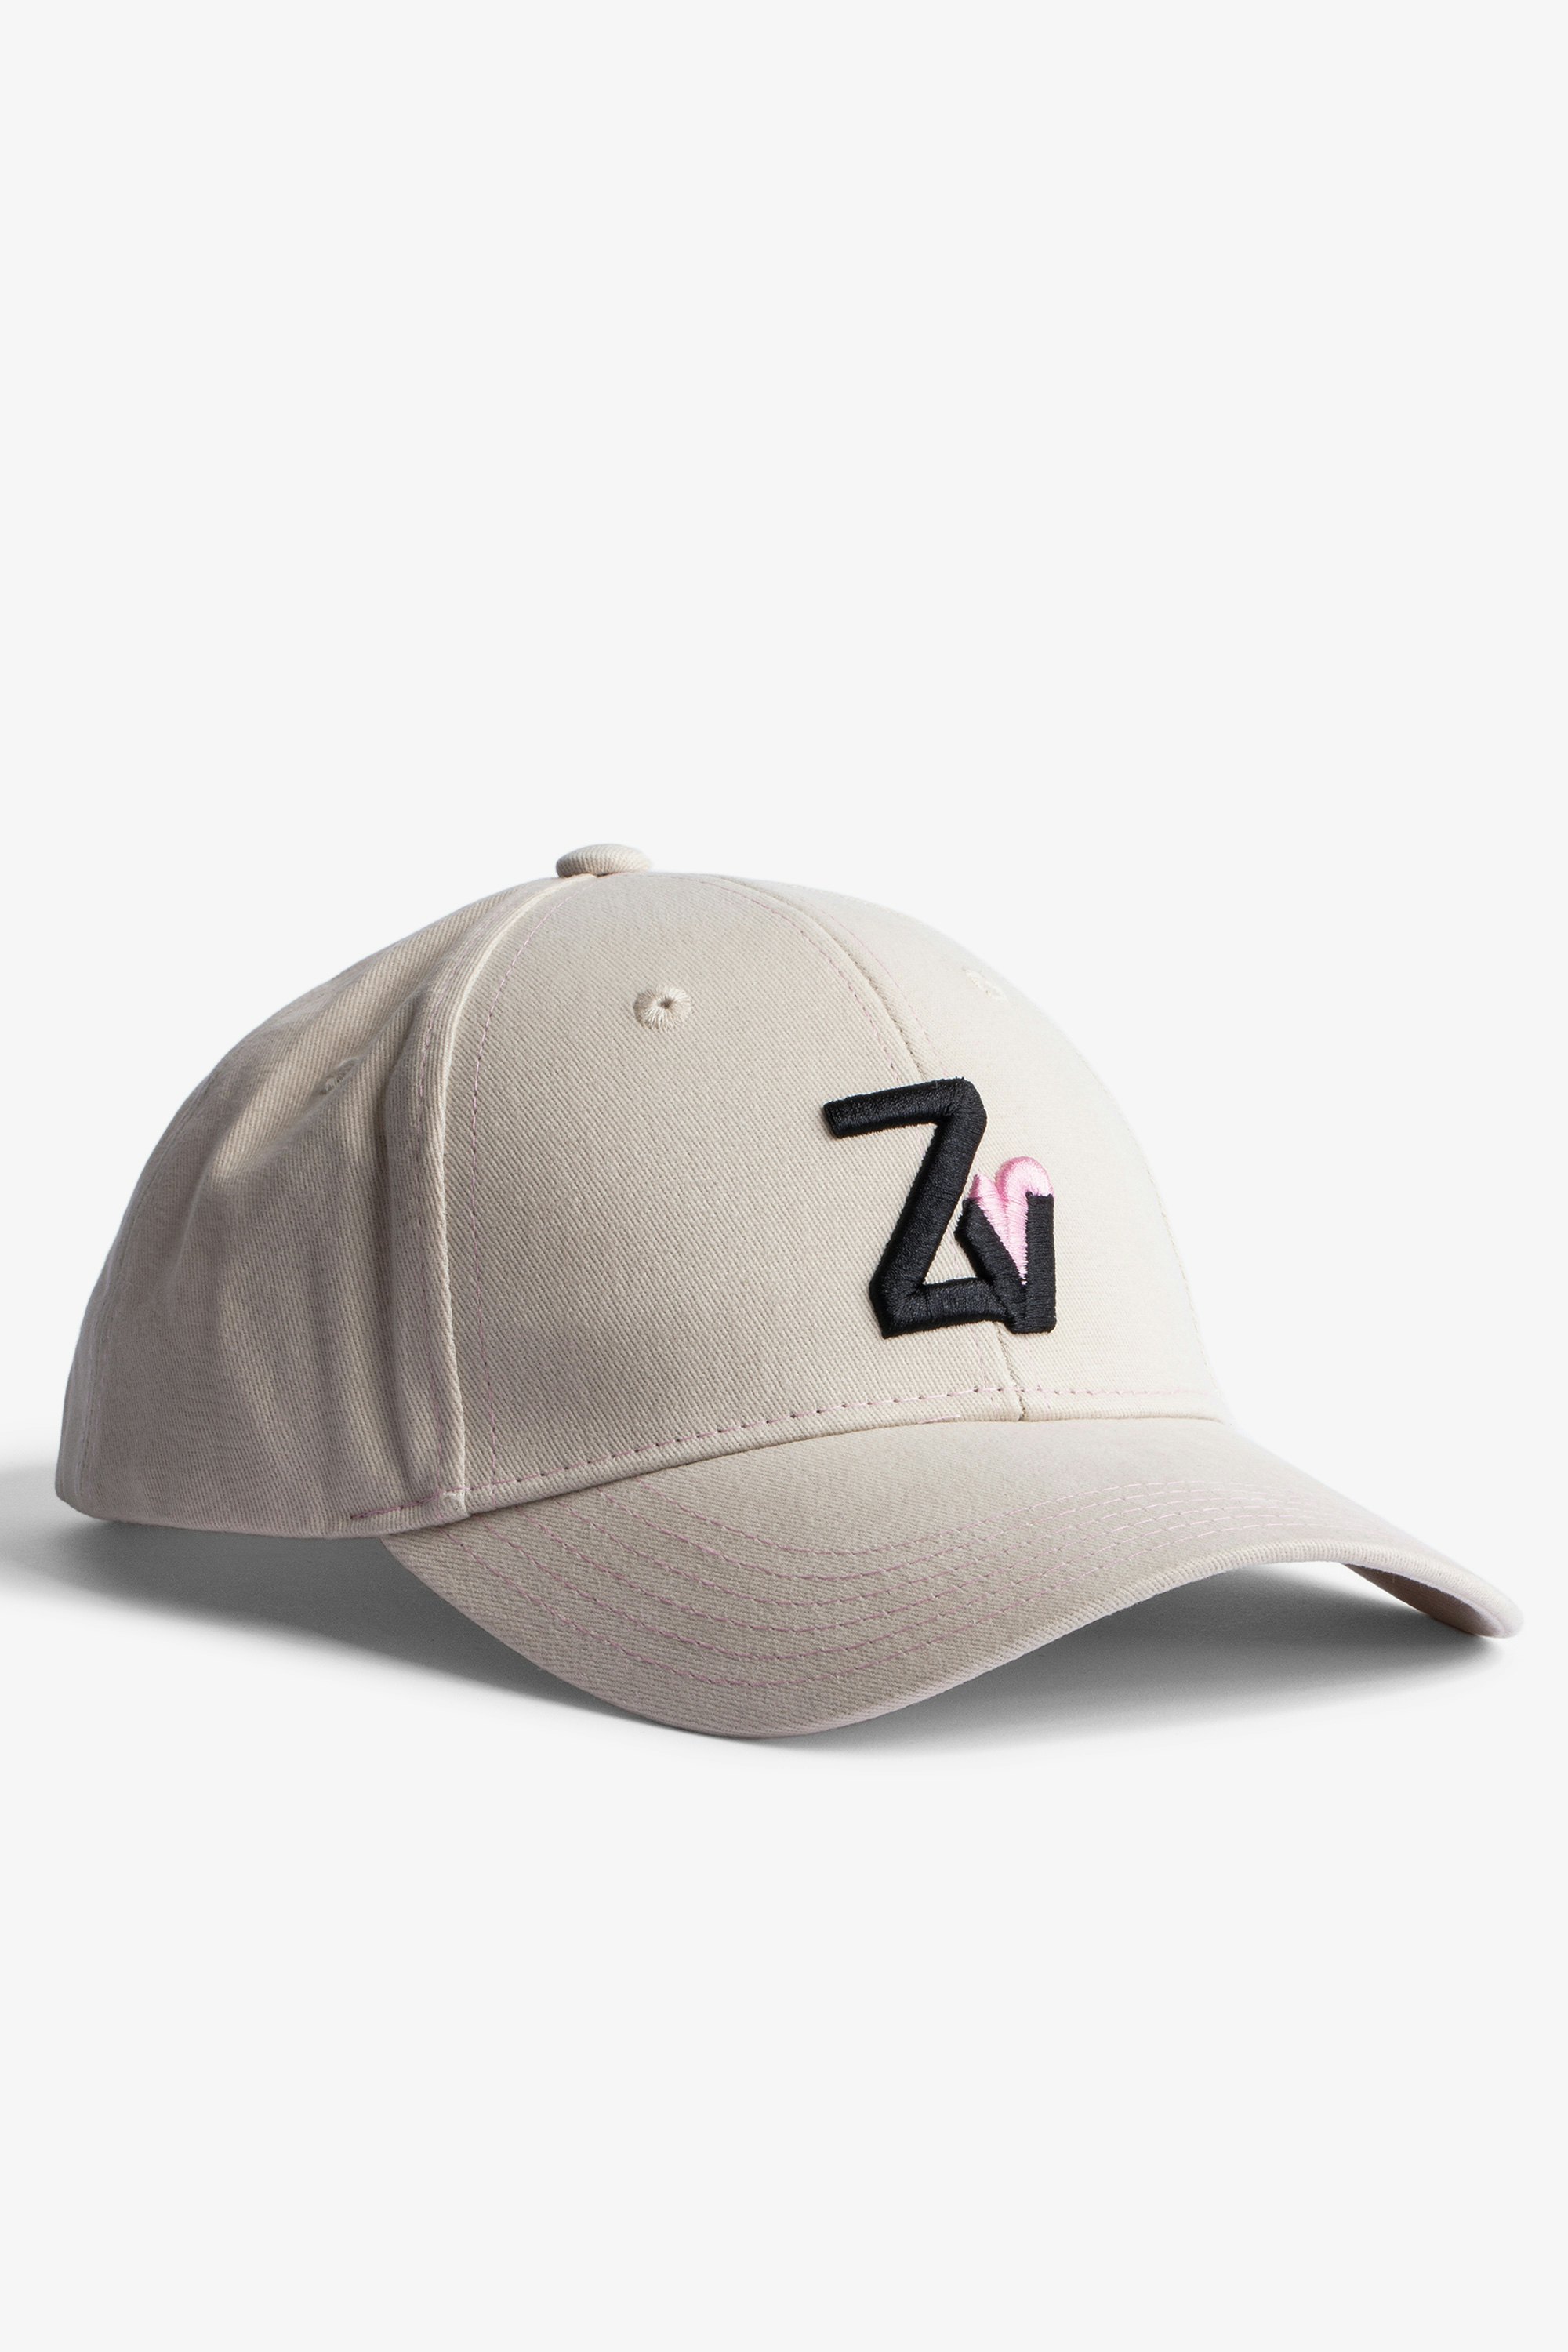 ZV Crush Klelia 帽子 Women's cap with ZV embroidery in white